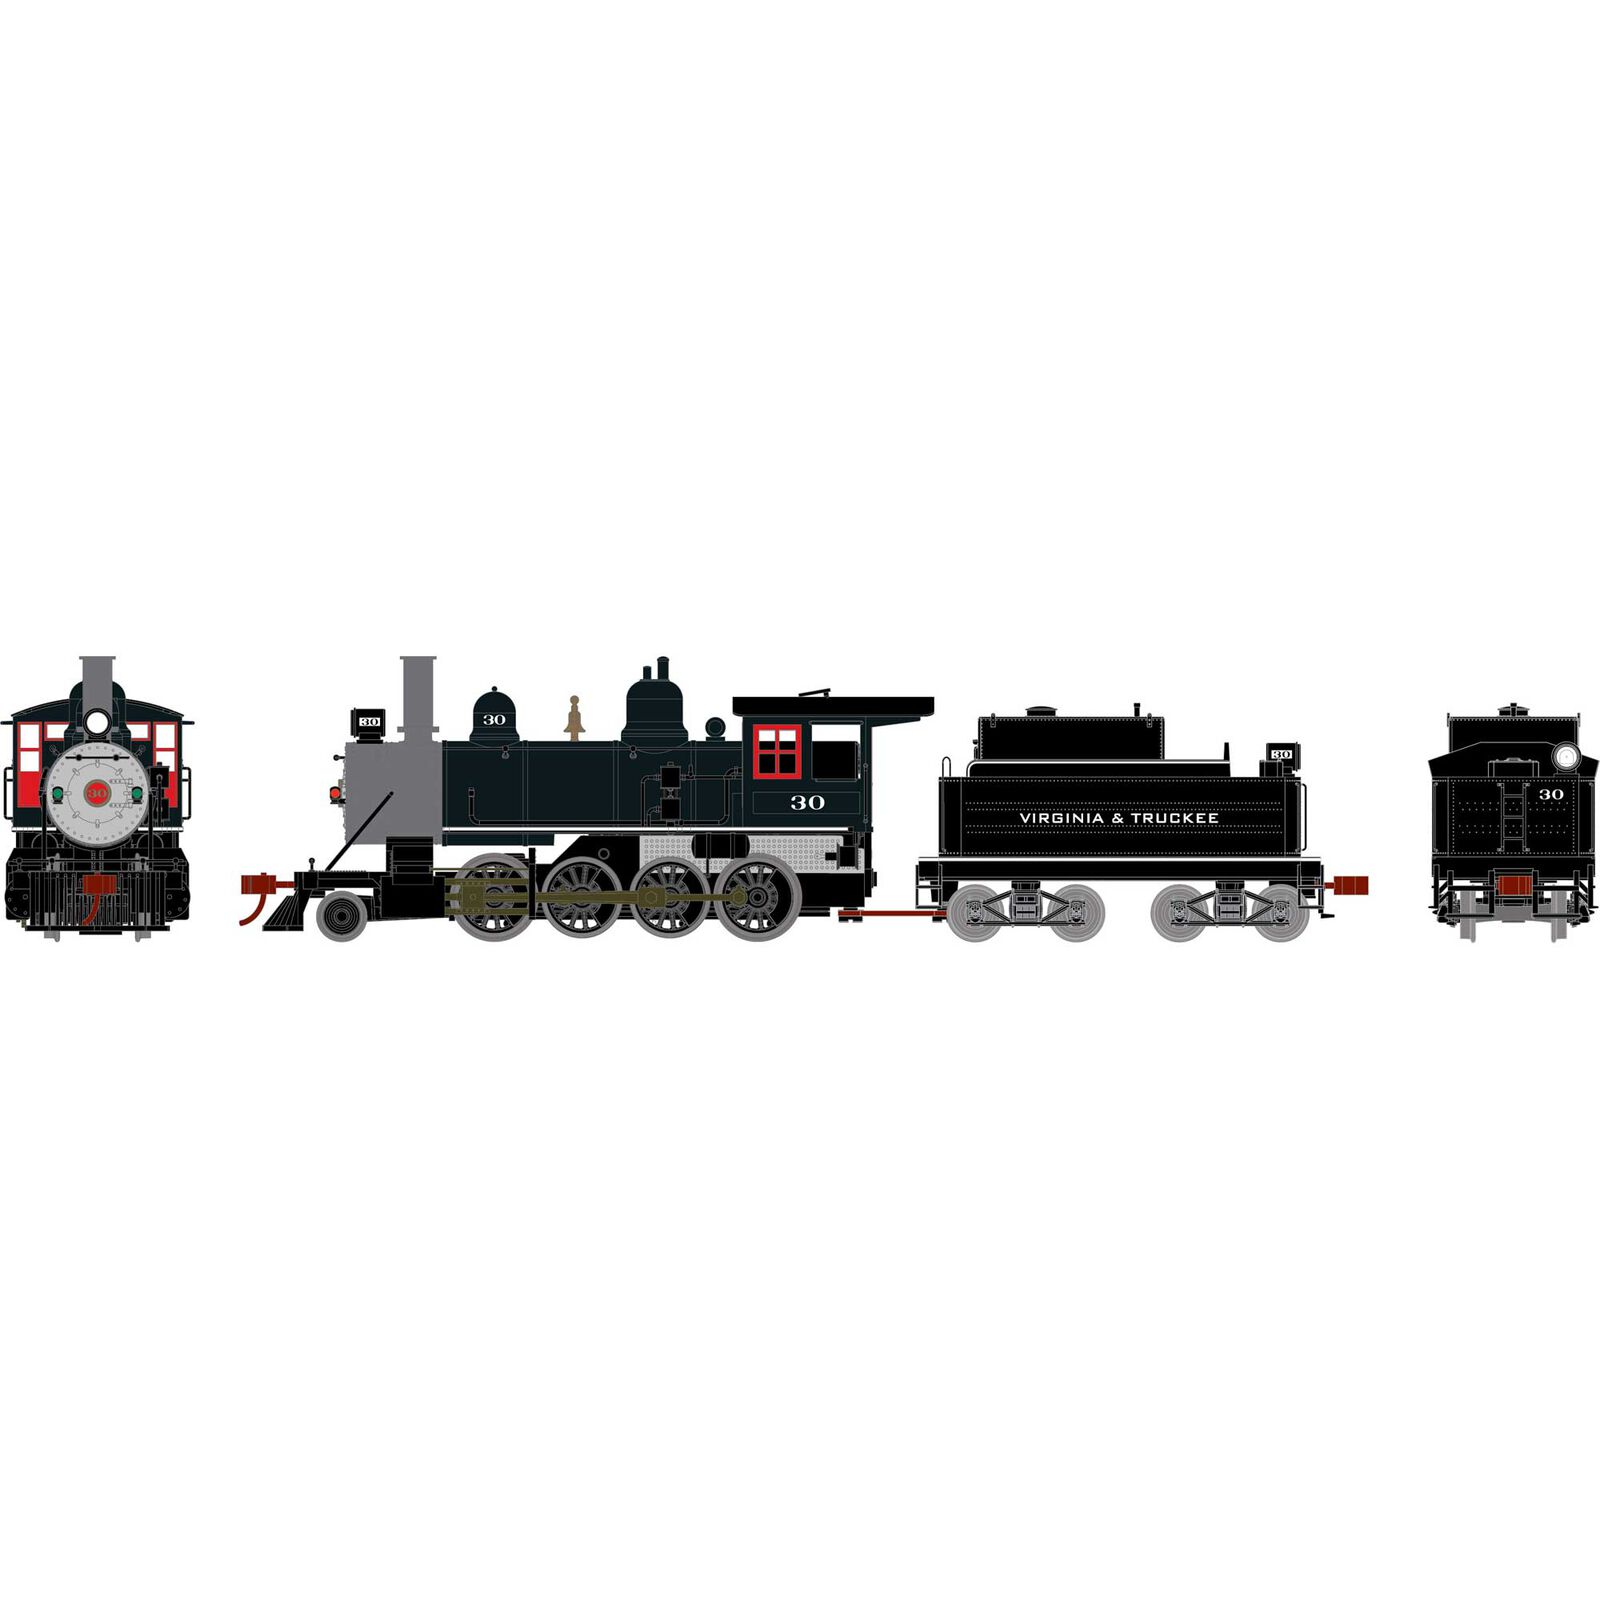 HO Old Time 2-8-0 Locomotive with DCC & Sound, V&T #30